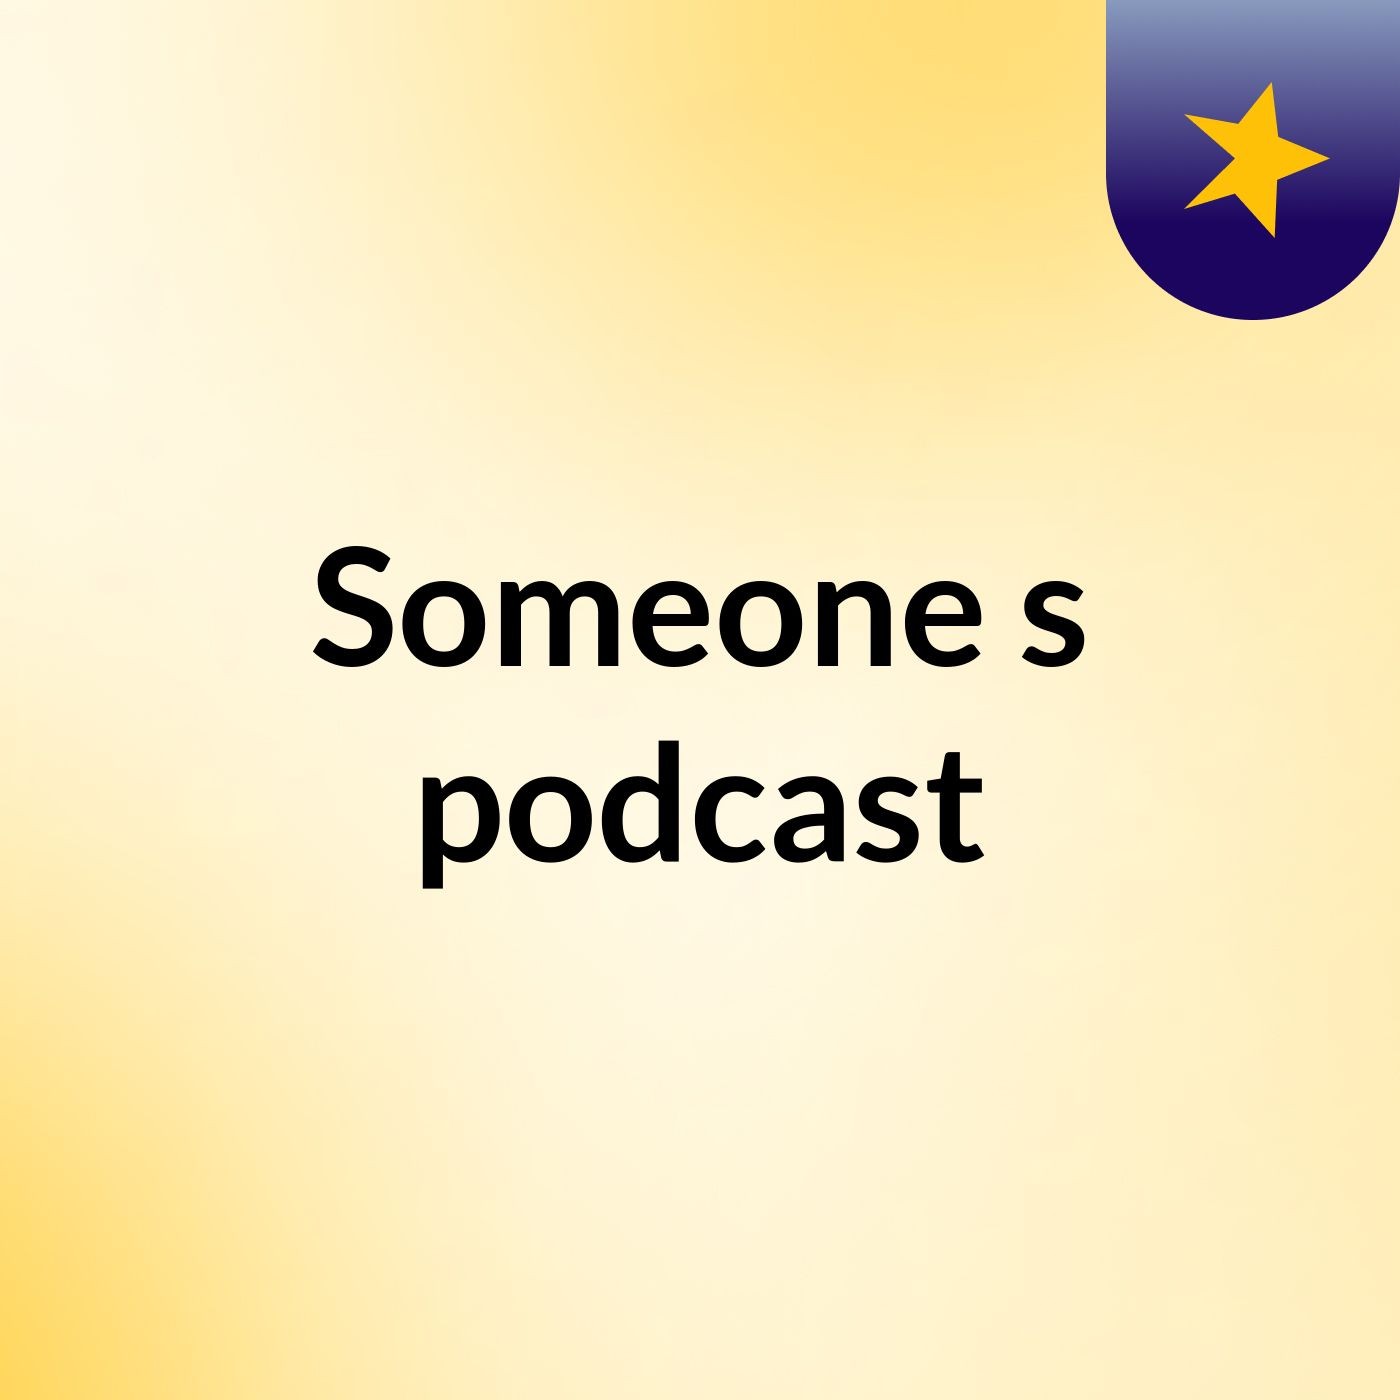 Episode 2 - Someone's podcast